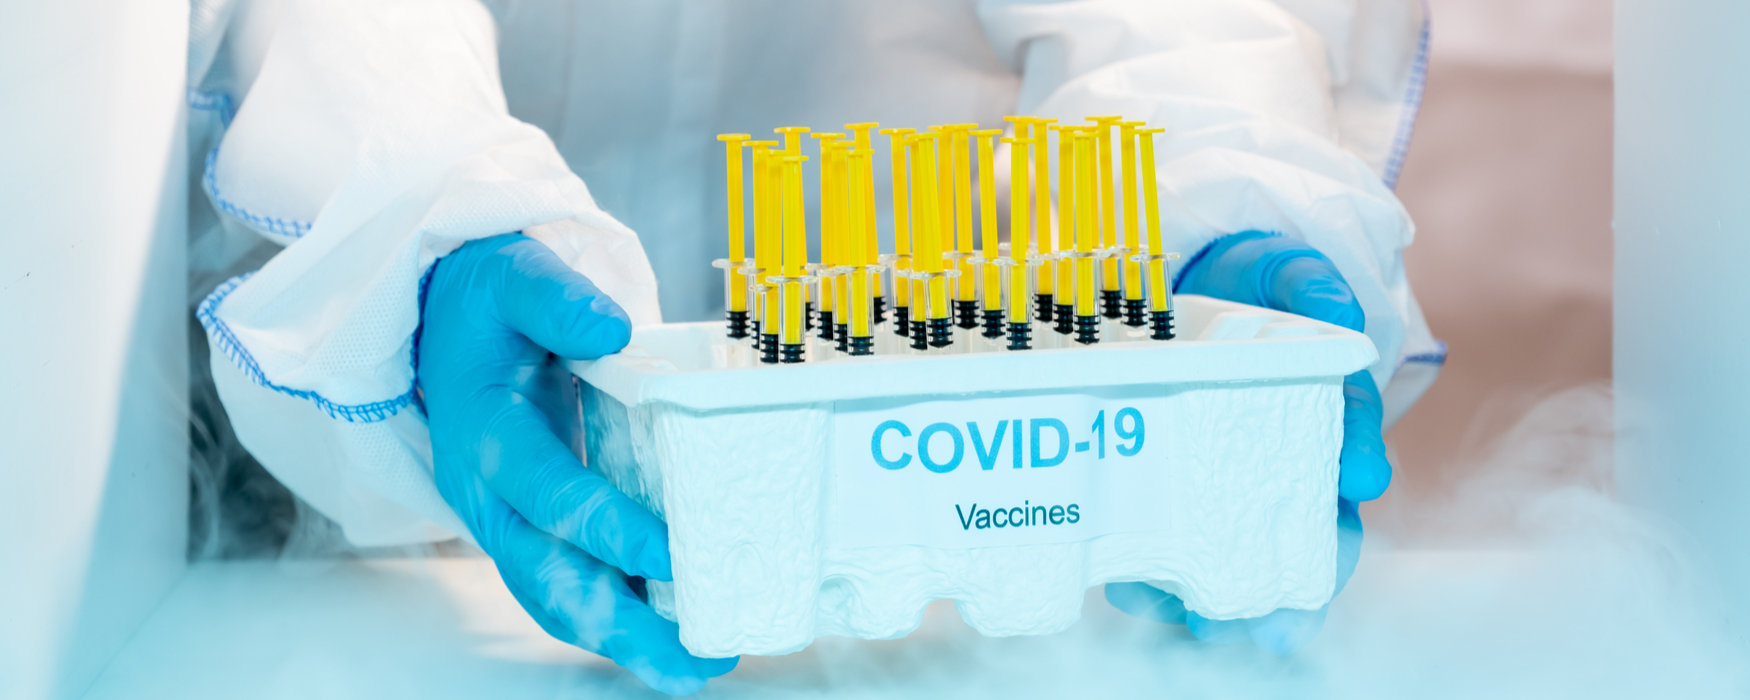 Ohio covid vaccine freezers - covid 19 vaccine freezer - vaccine storage in Ohio